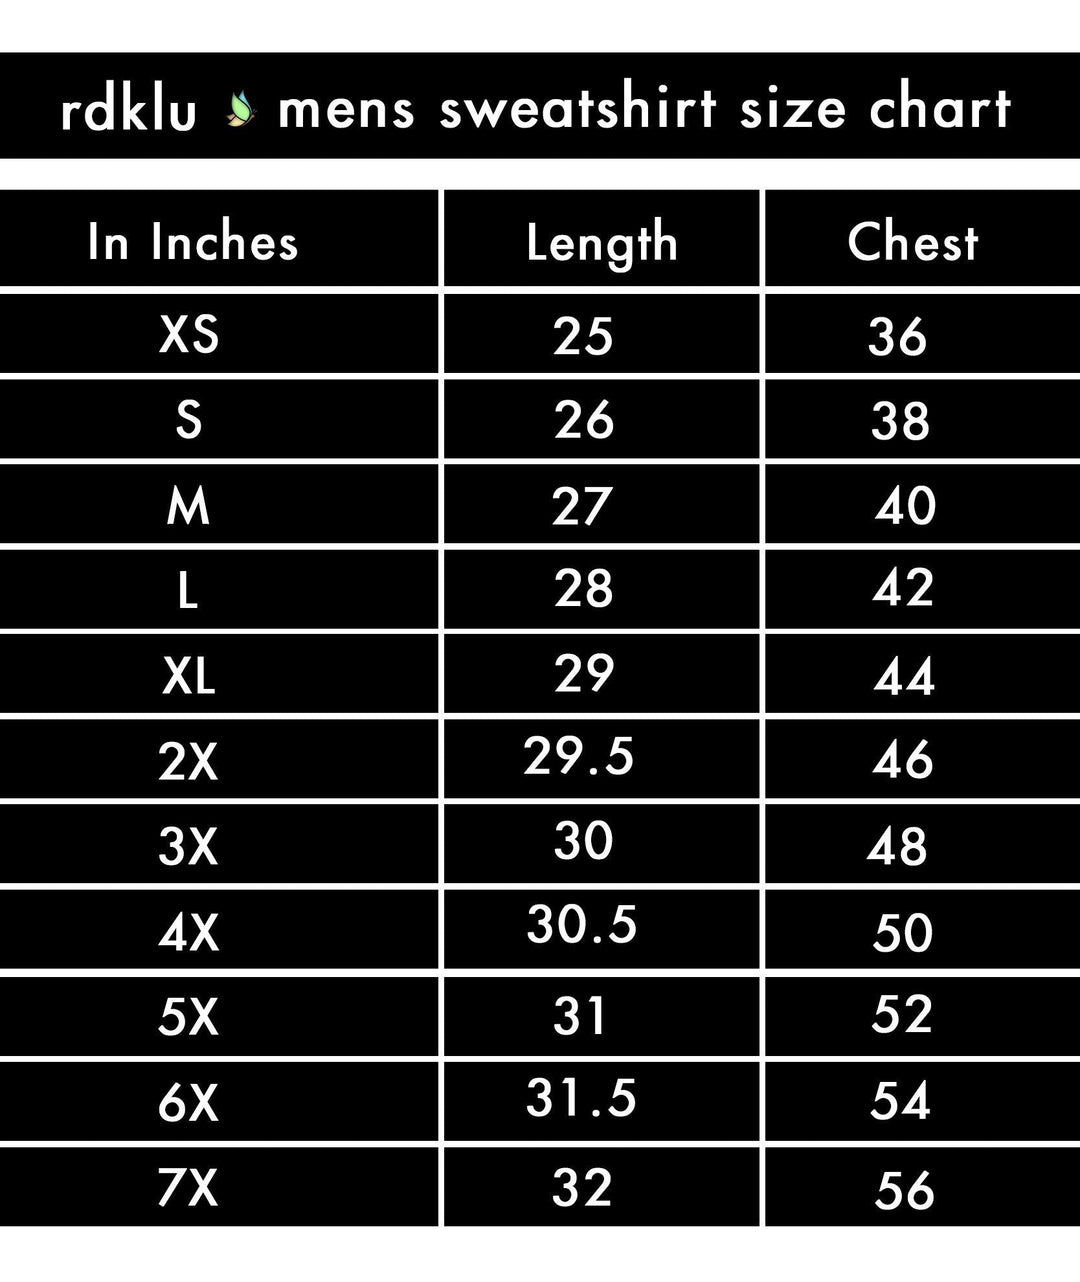 RDKLU MENS SWEATSHIRT - RDKL - Men's Sweatshirt#117